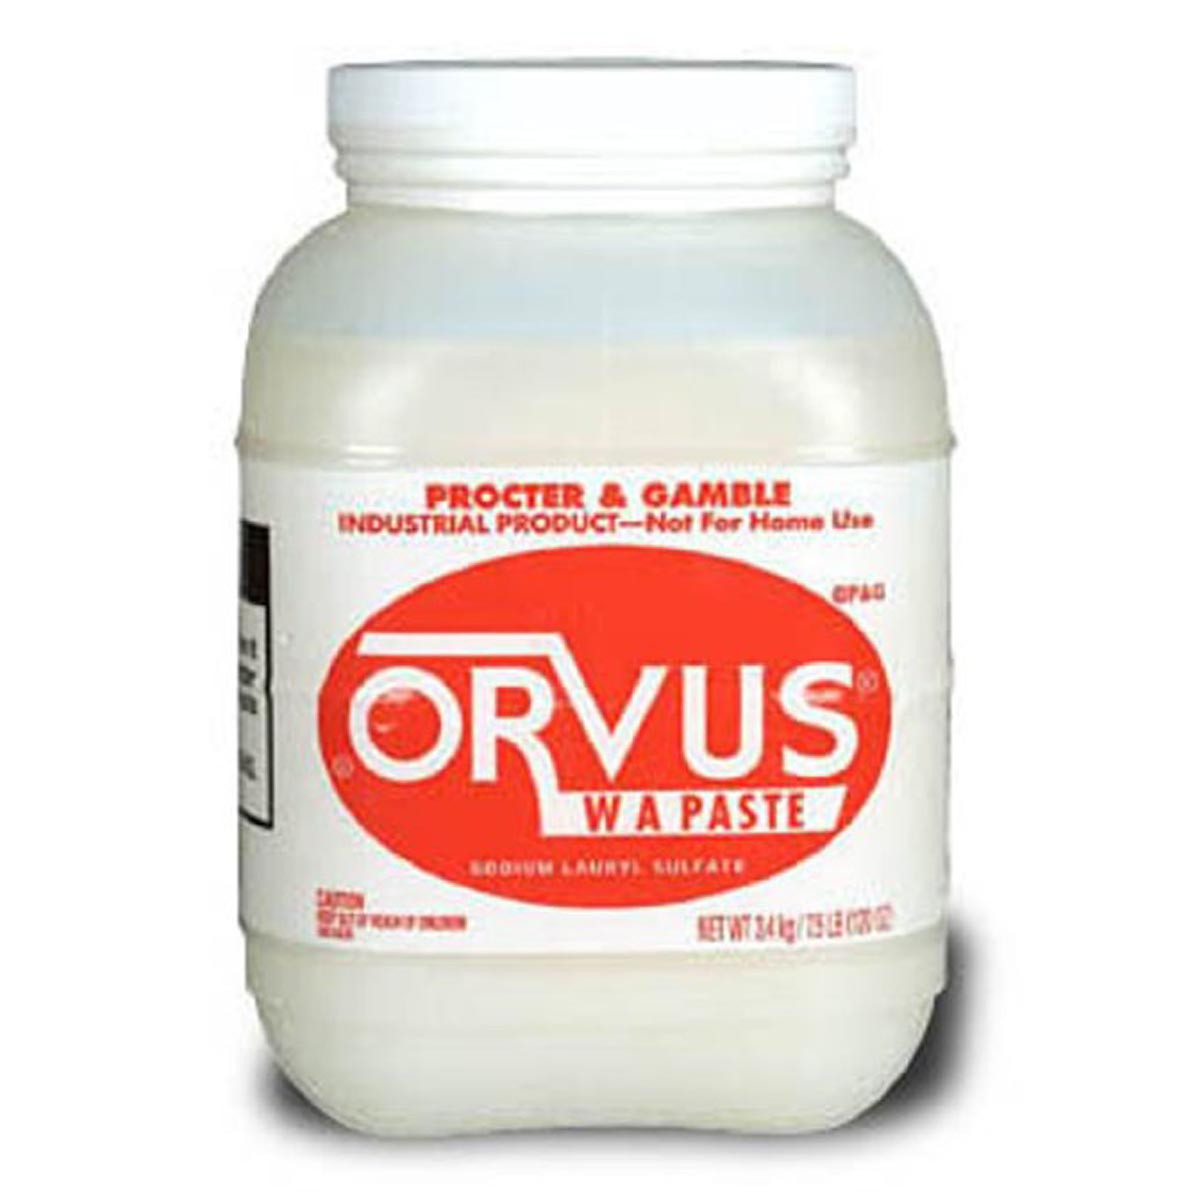 Orvus Soap - 3.4 kg